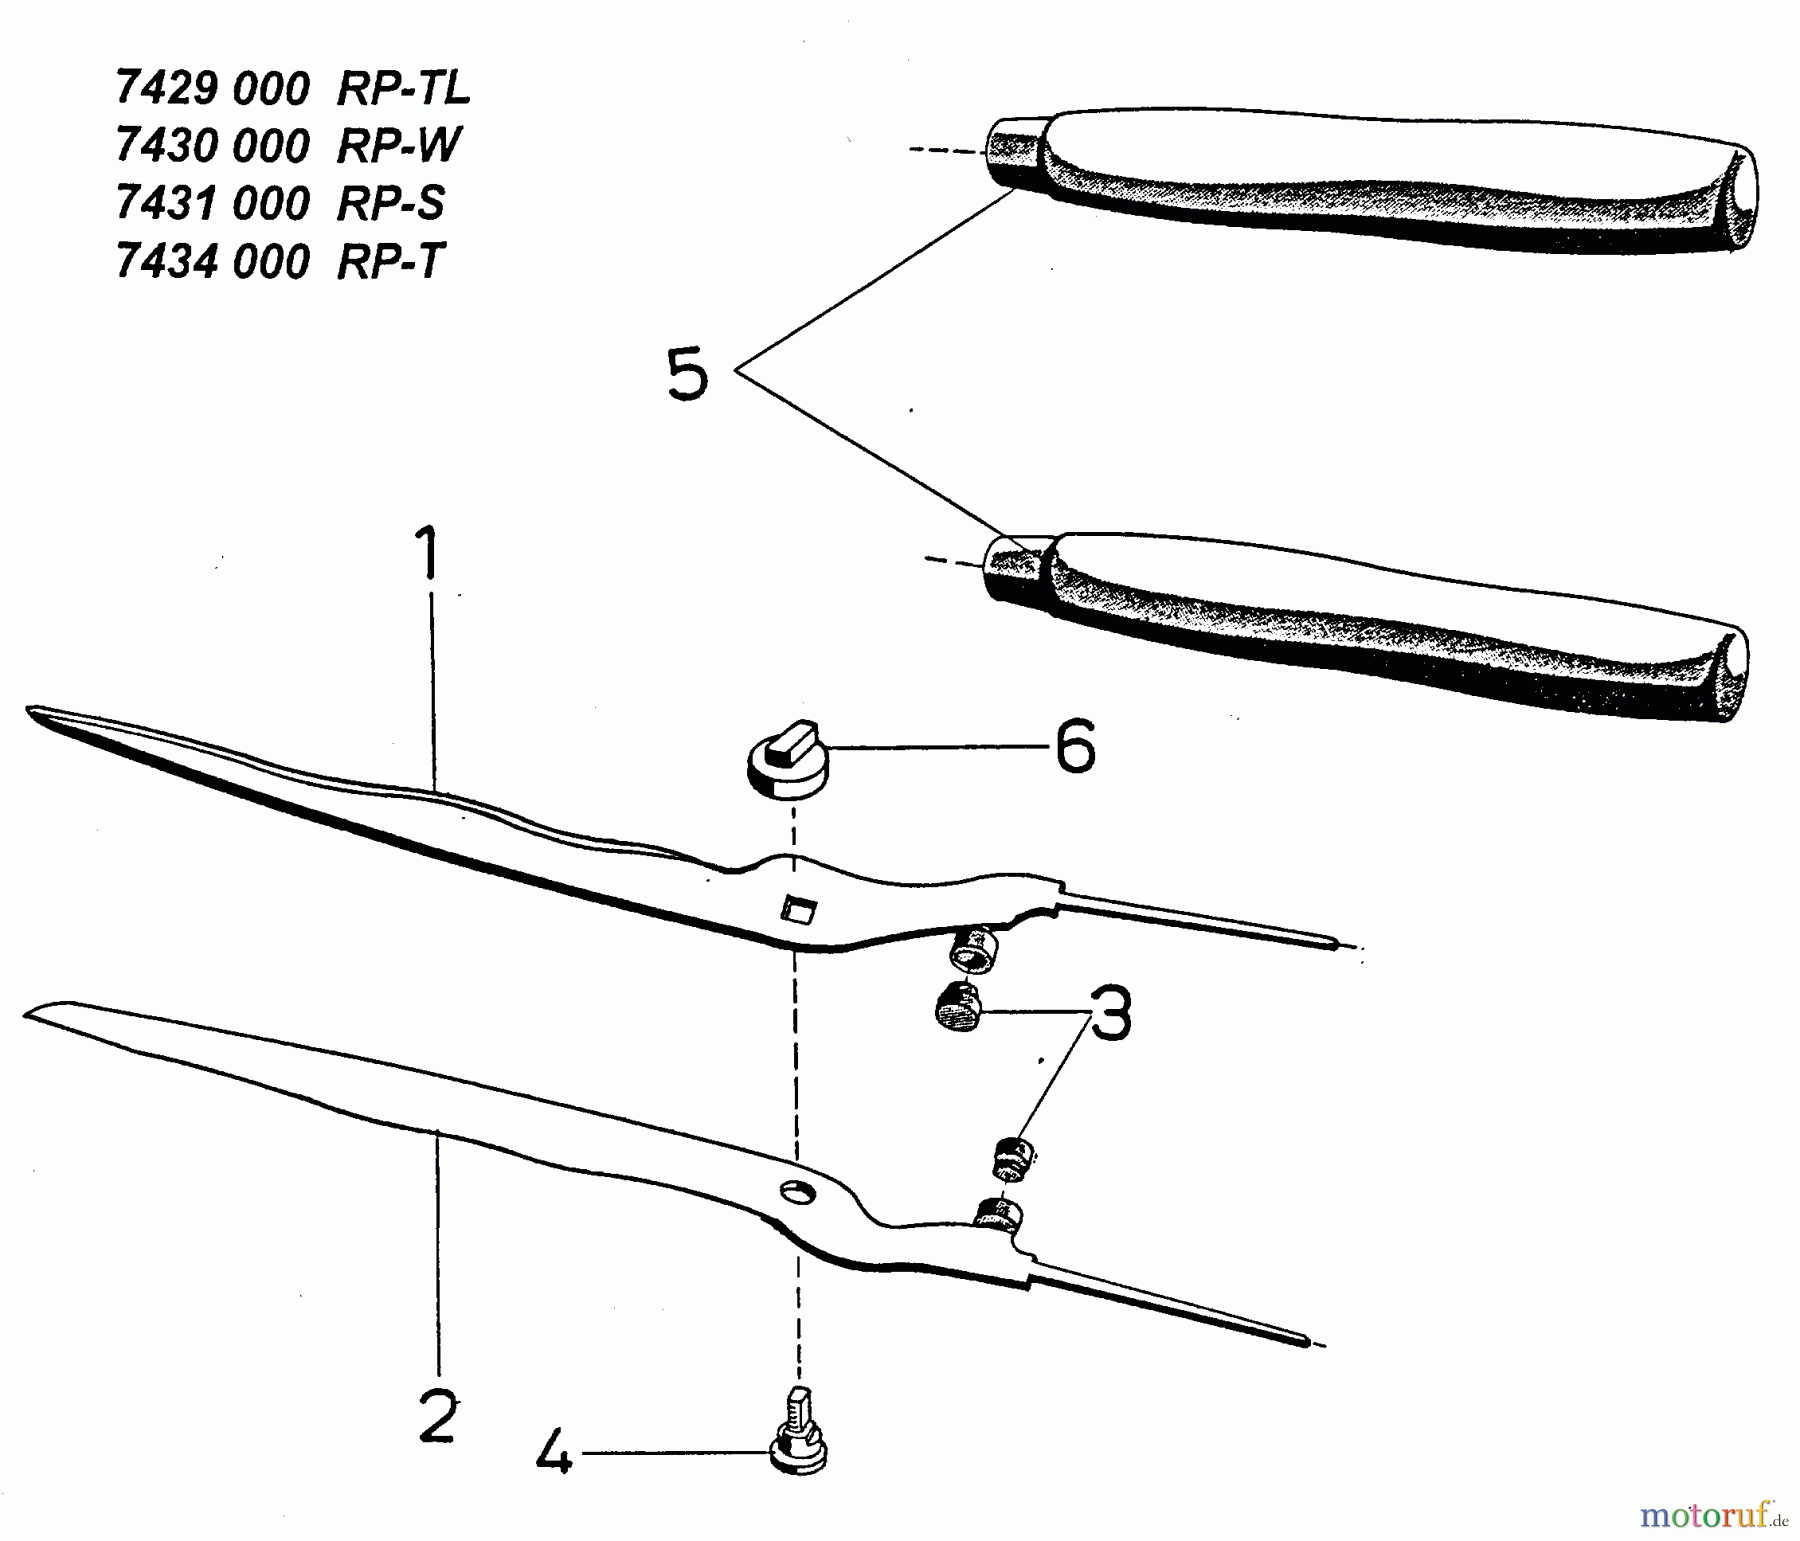  Wolf-Garten Hedge shears manually operated RP-TL 7429000  (1998) Basic machine